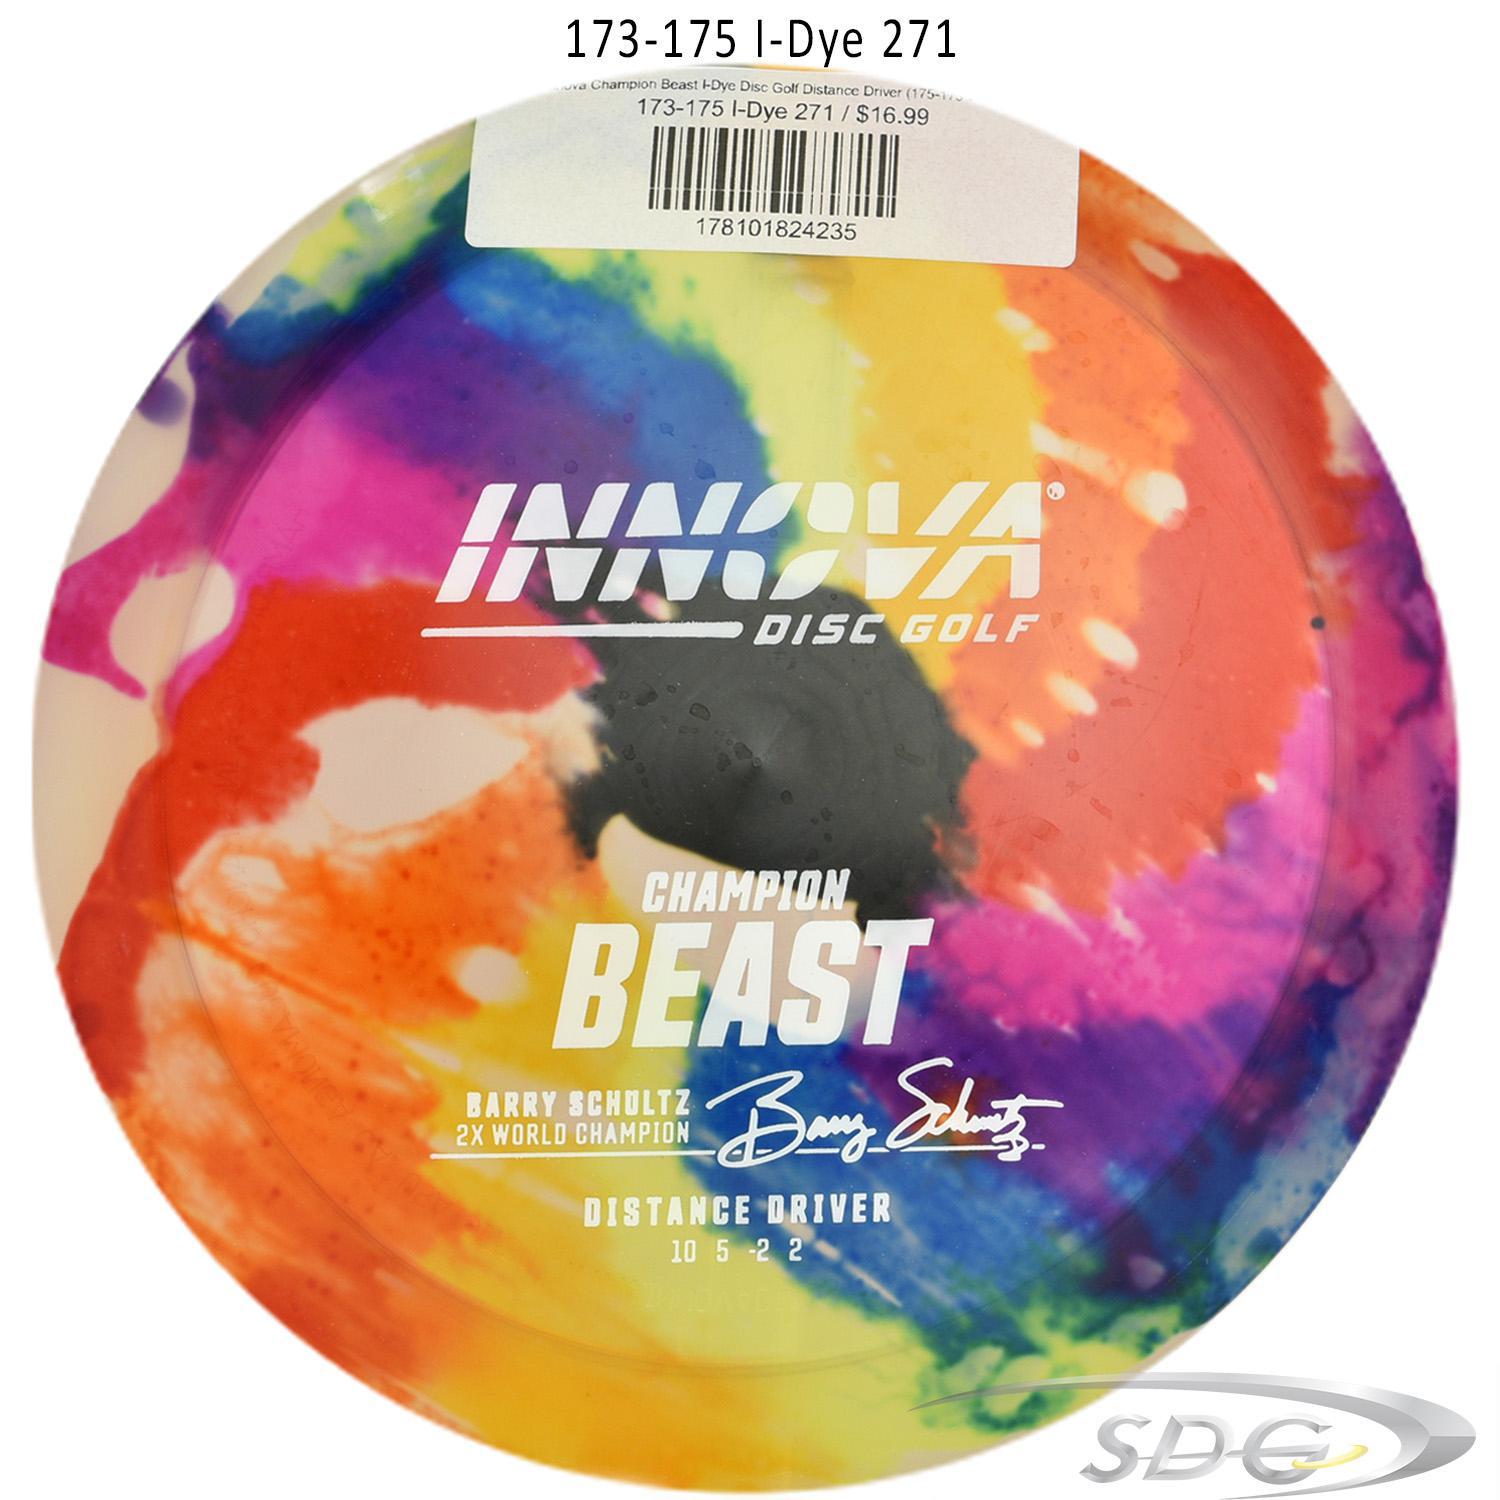 innova-champion-beast-i-dye-disc-golf-distance-driver 173-175 I-Dye 271 